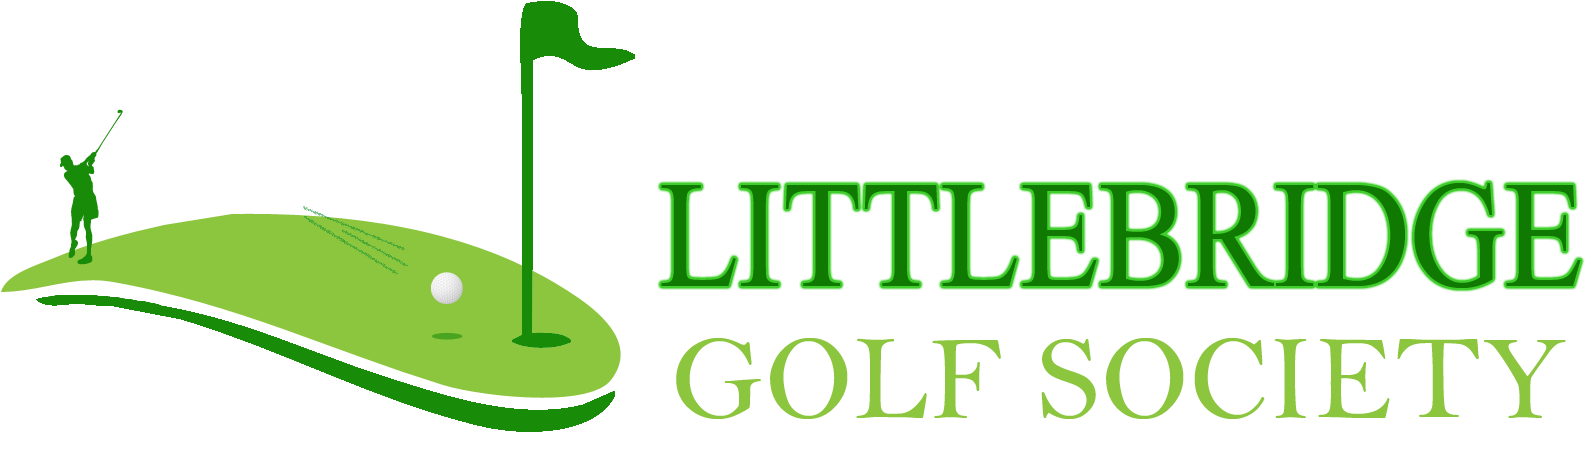 Littlebridge Golf Society